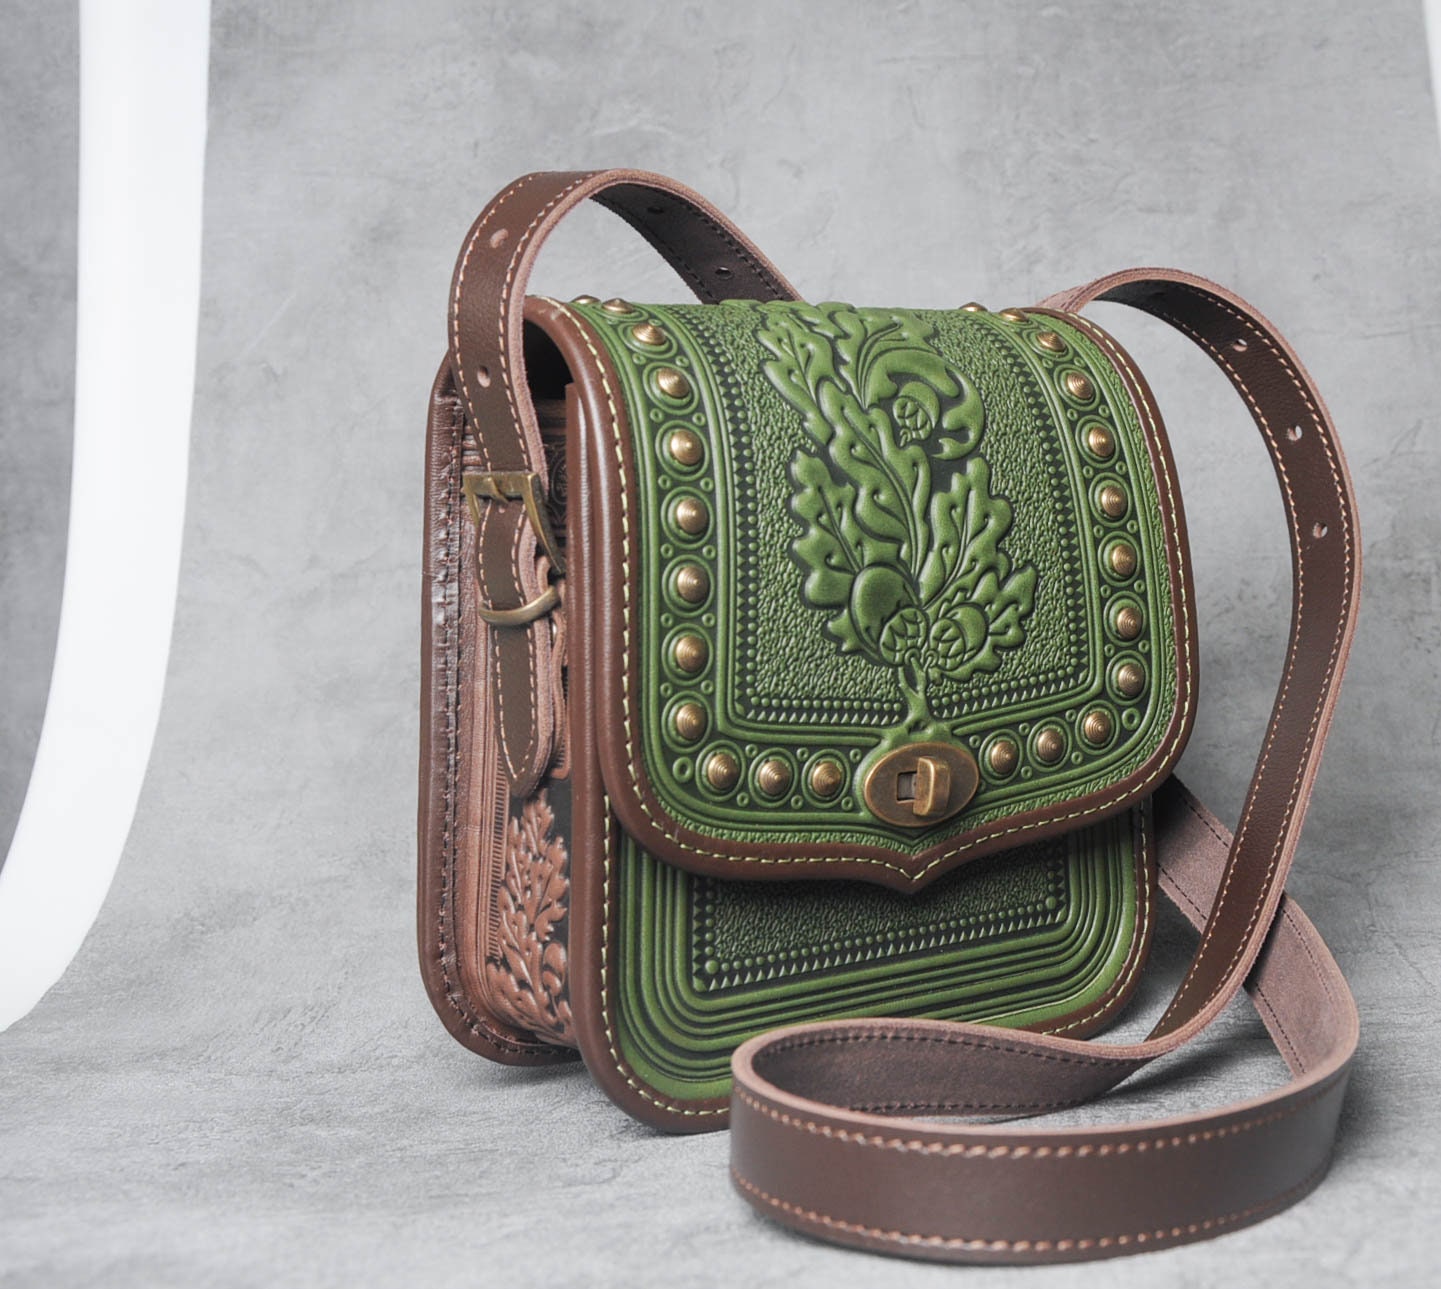 Oyccen Fashion Portable Tote Rivet Round Handbag Ladies Shoulder Messenger Bag for Women 